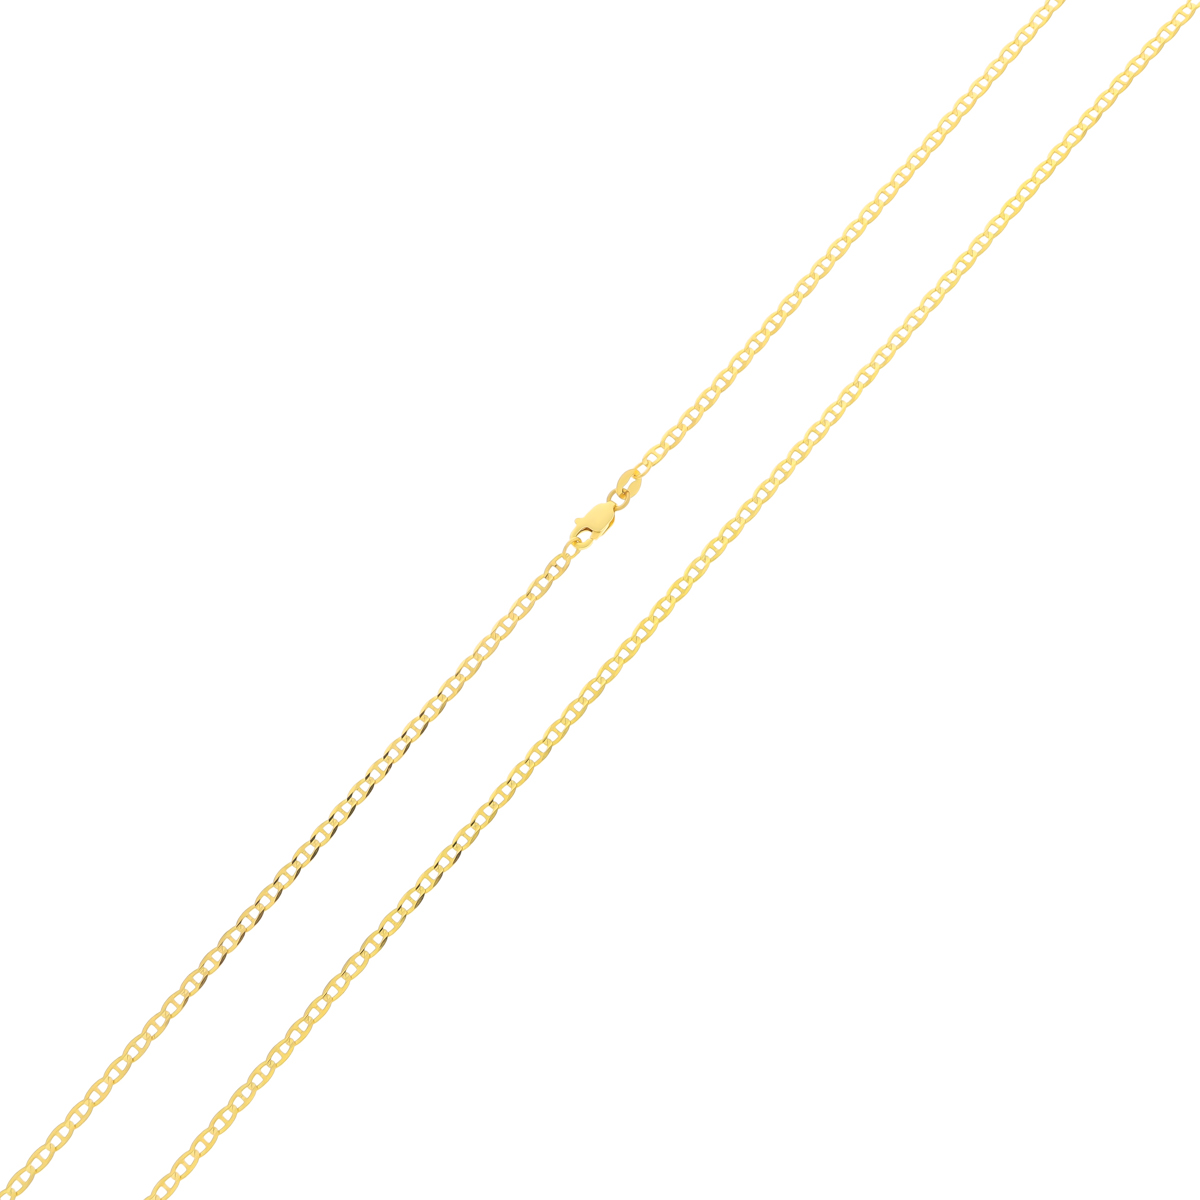 Złoty lańcuszek 55 cm splot gucci Jubiler Monika LA-GU144-55-KA-3M (3)